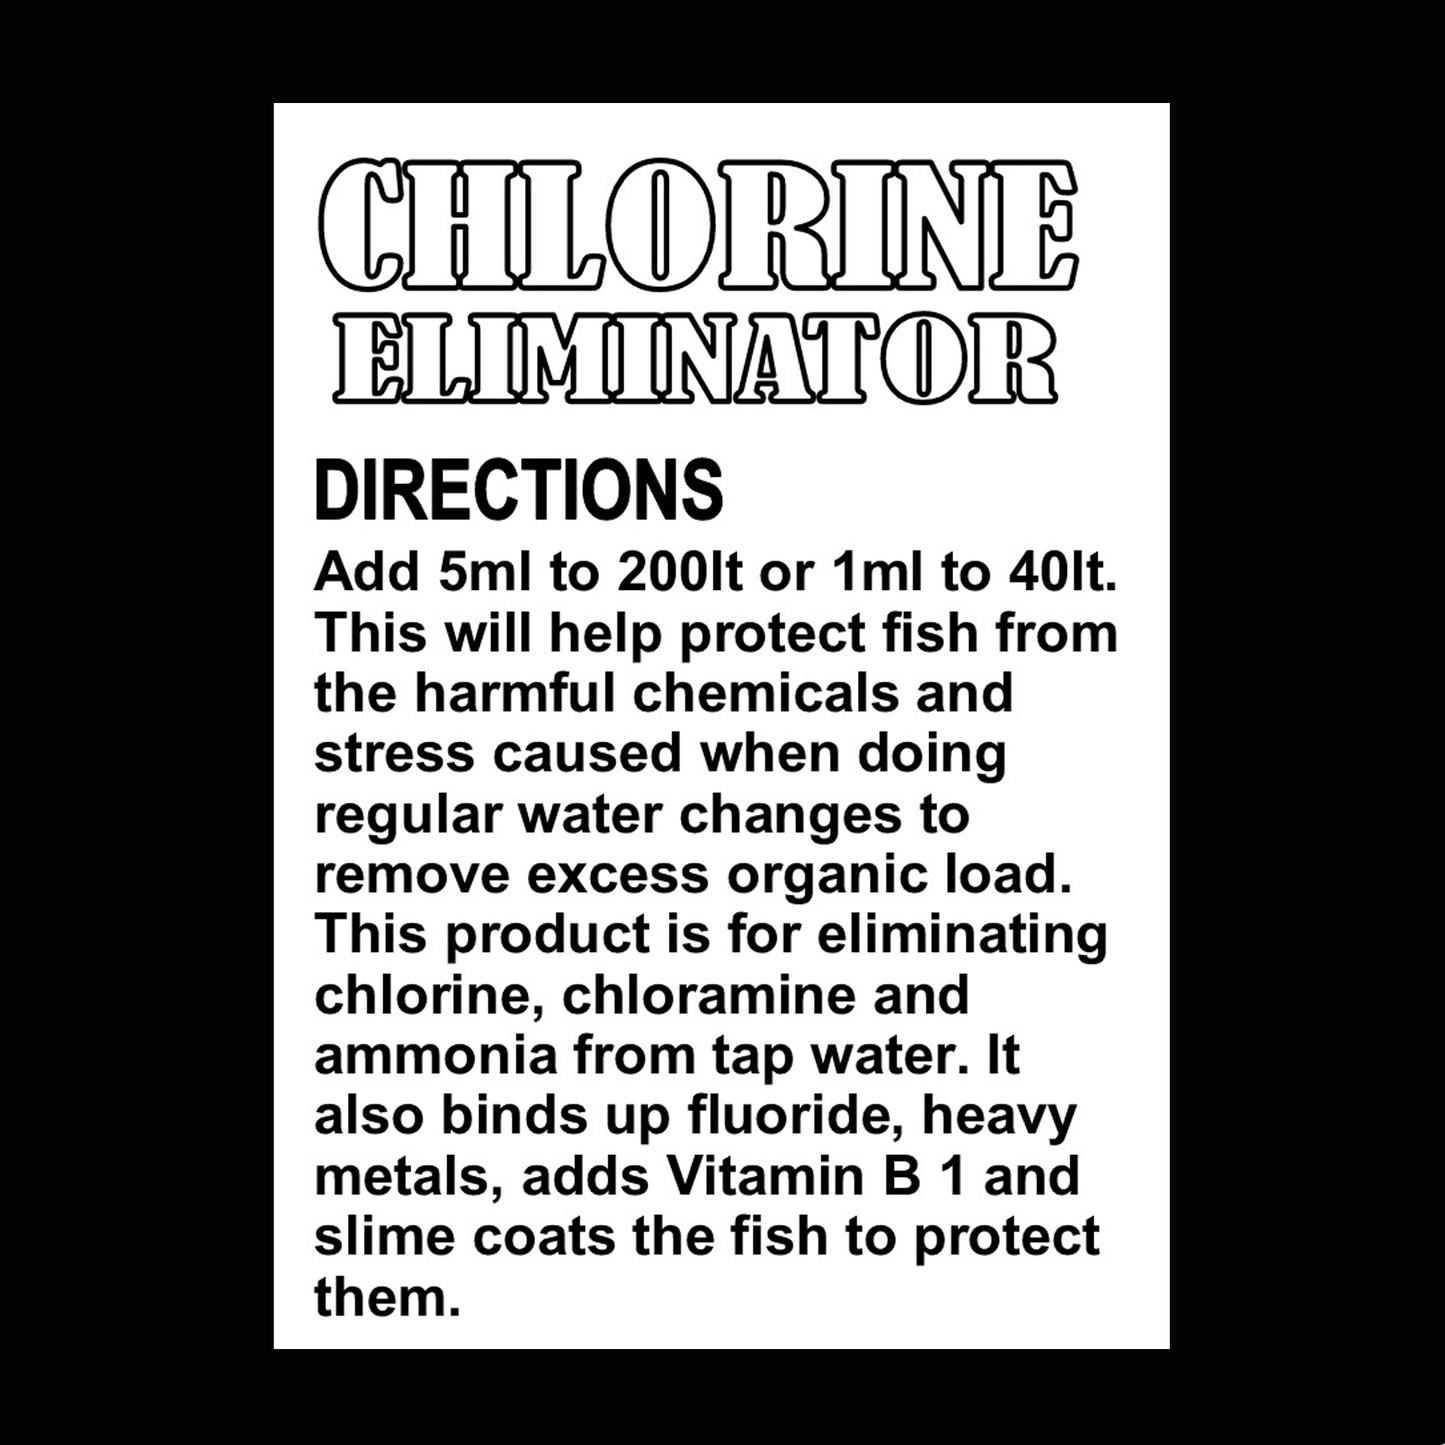 Chlorine Eliminator Concentrate 500ml